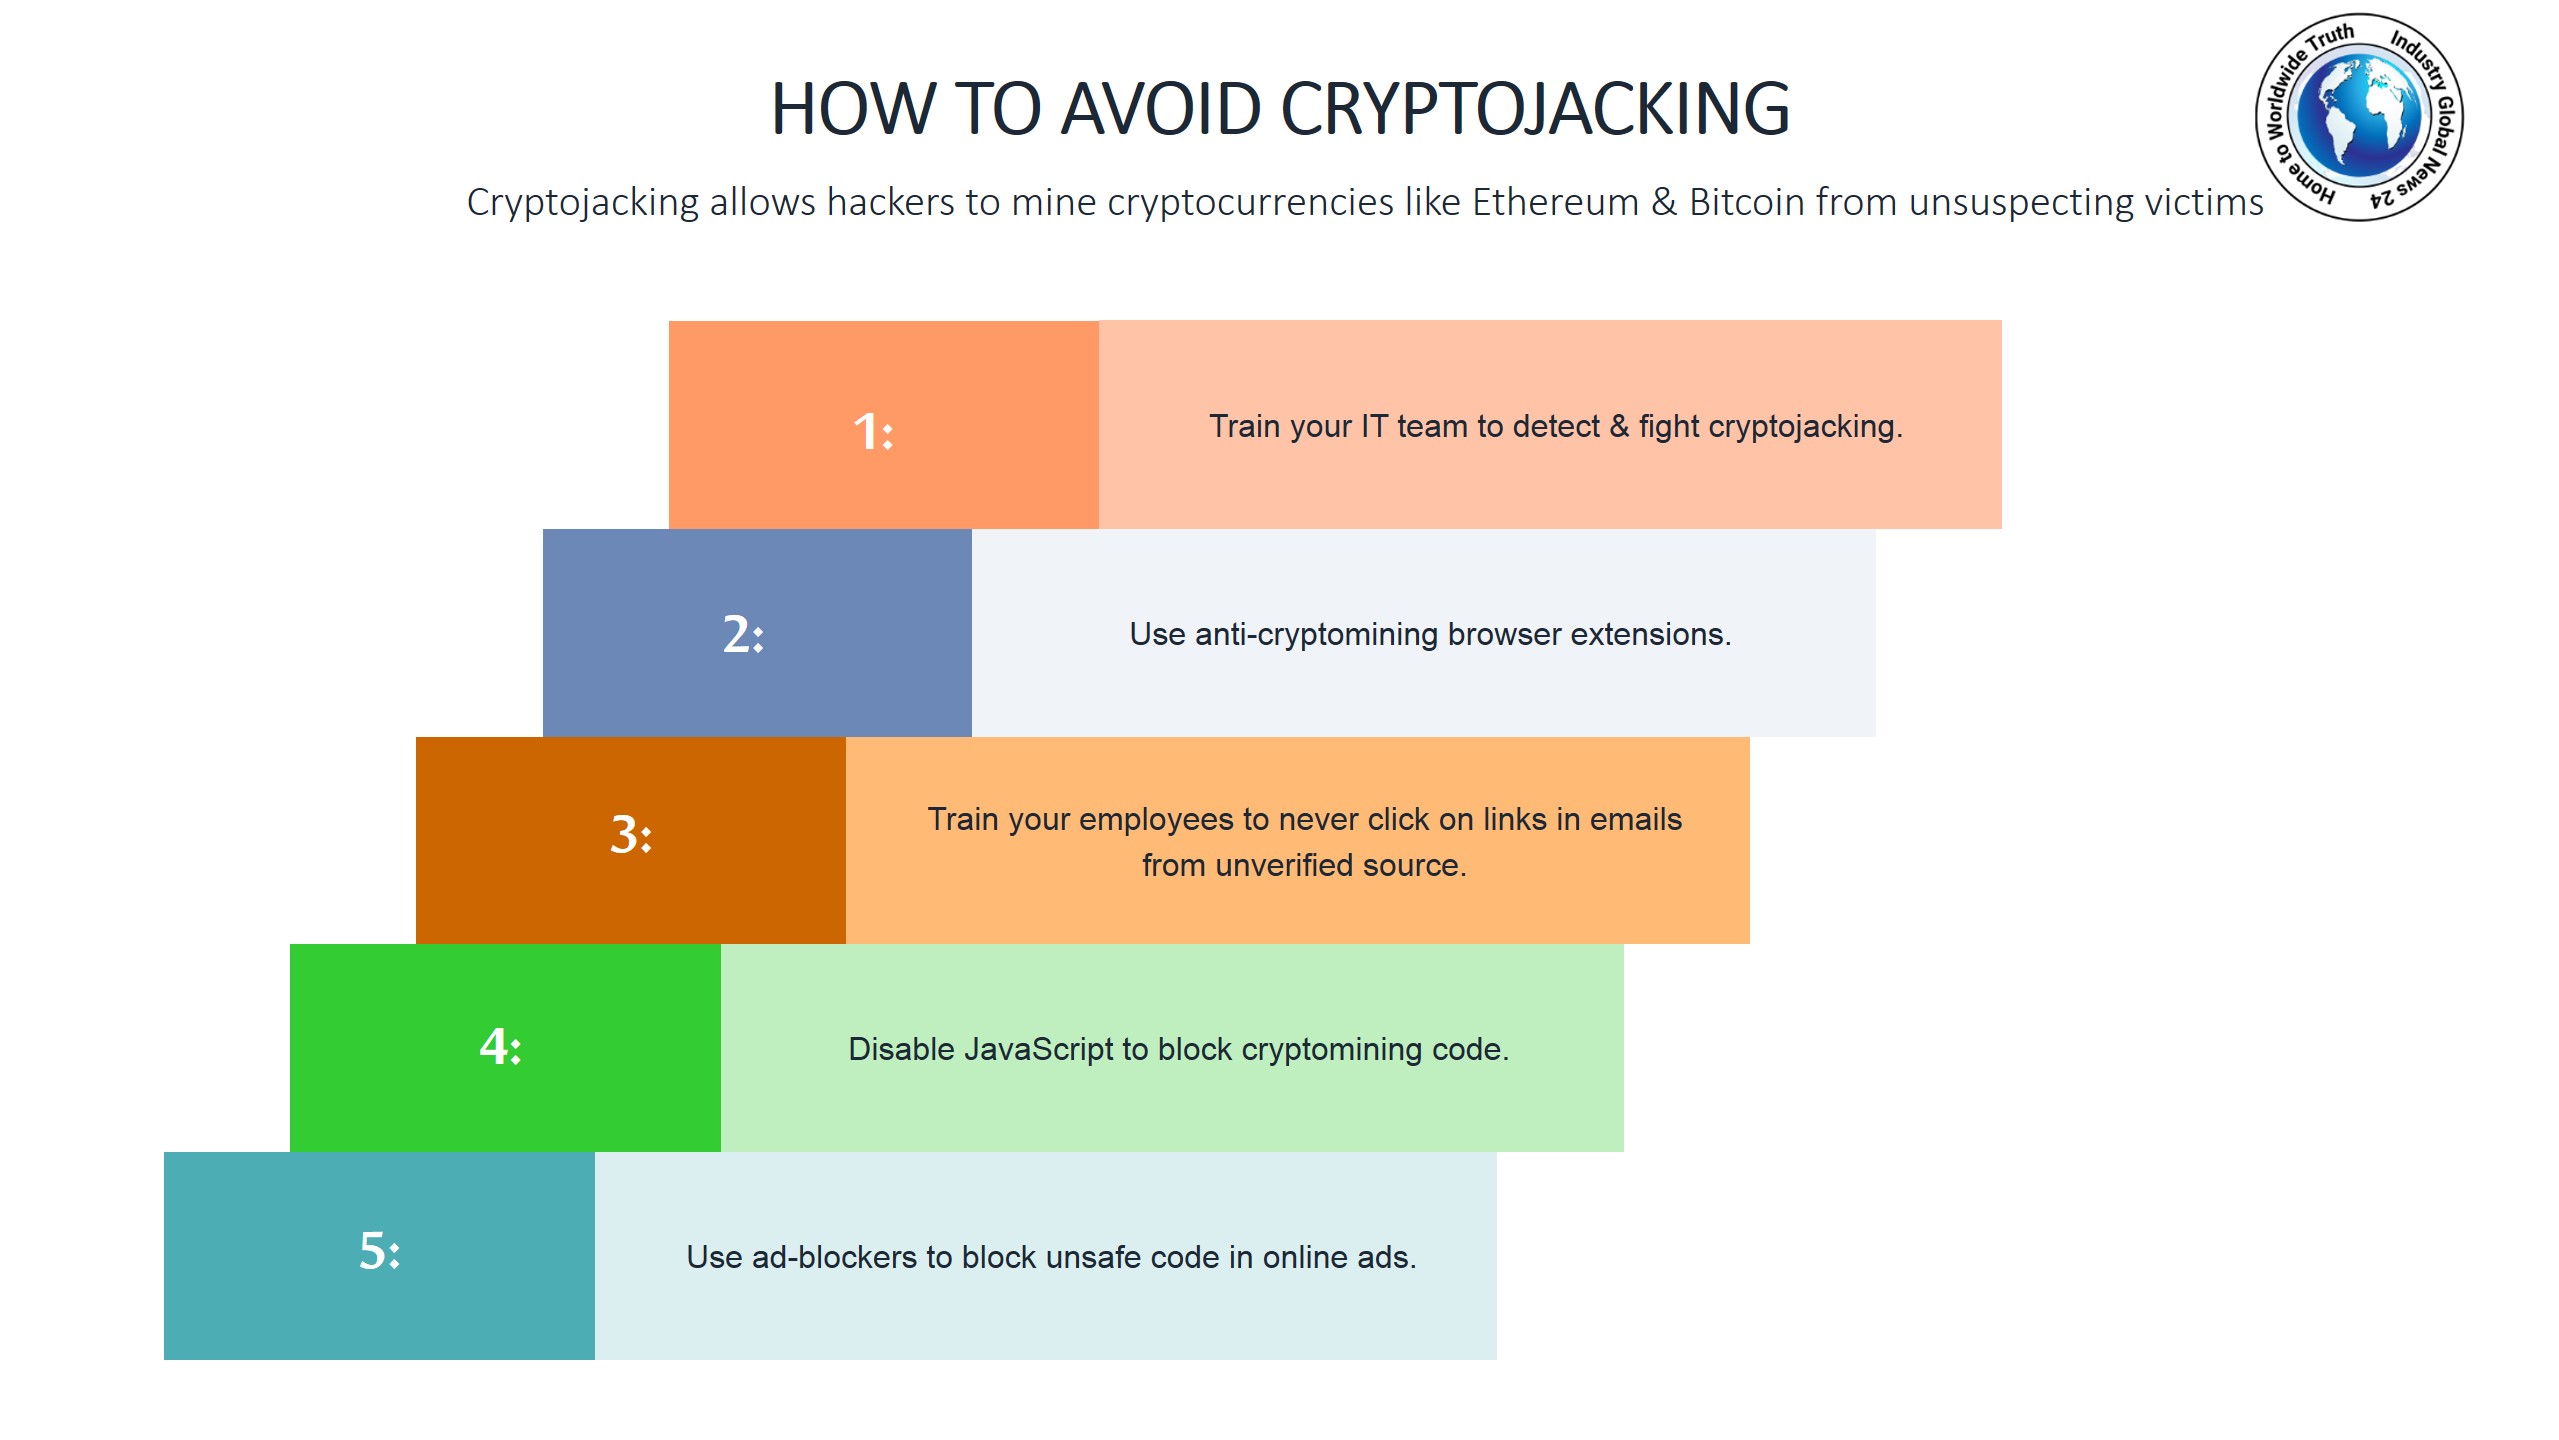 How to avoid cryptojacking